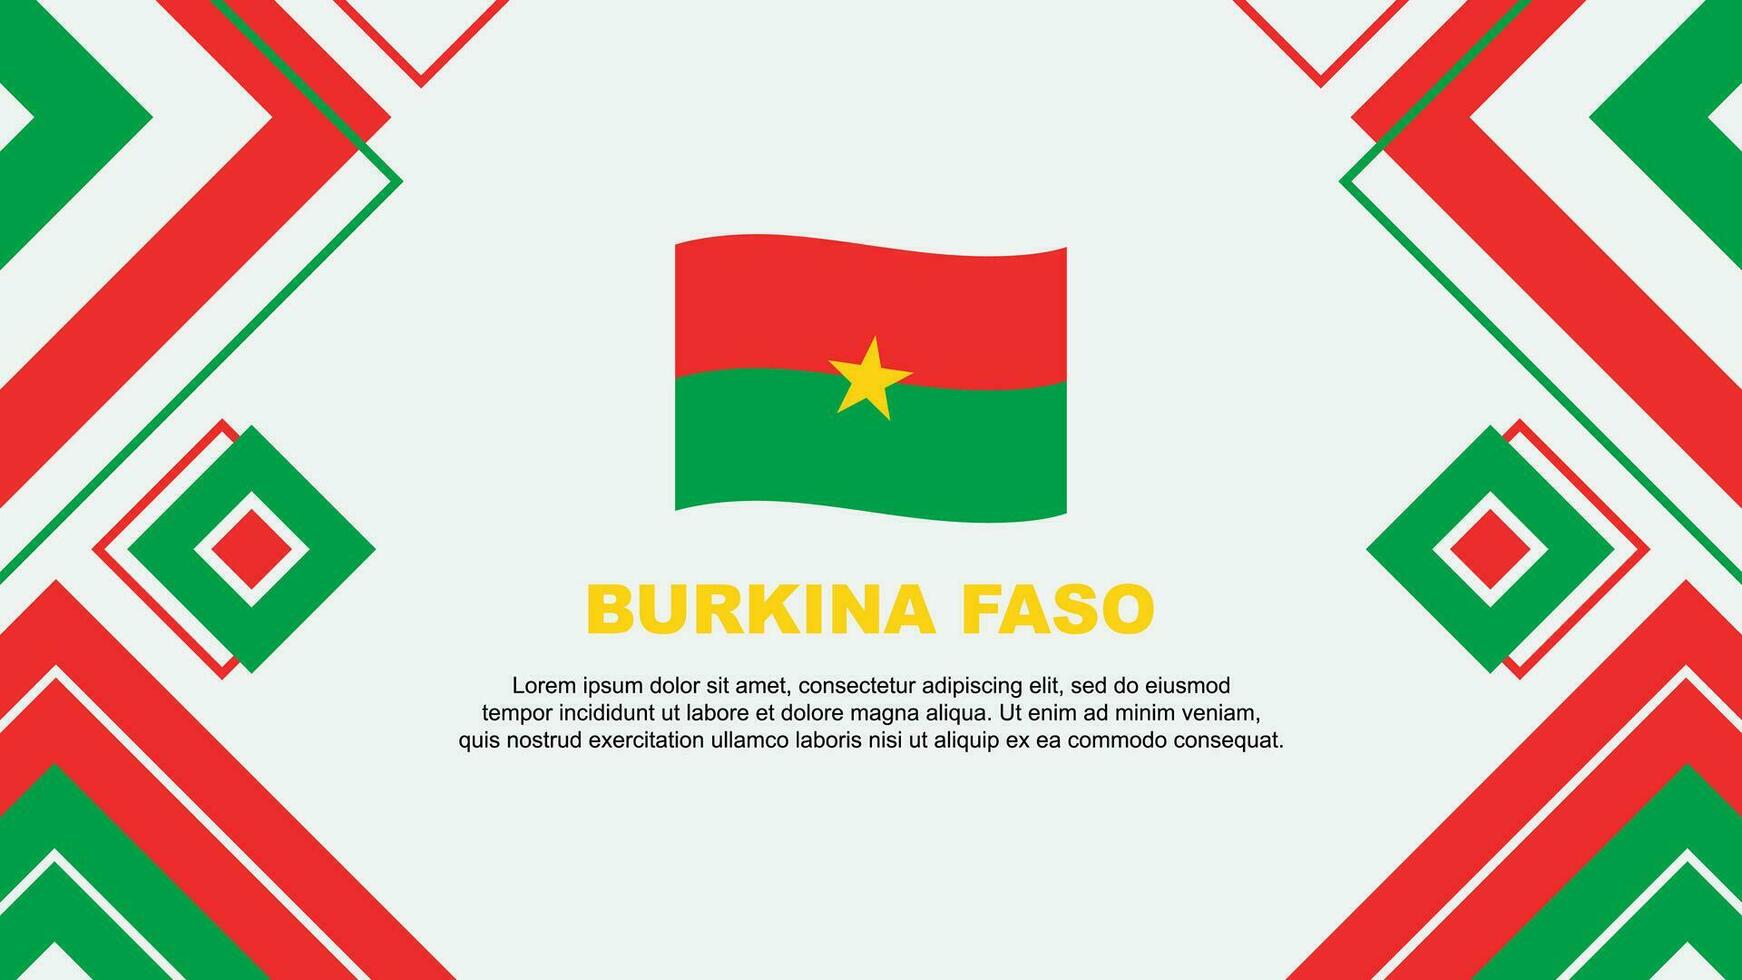 Burkina Faso Flag Abstract Background Design Template. Burkina Faso Independence Day Banner Wallpaper Vector Illustration. Burkina Faso Background